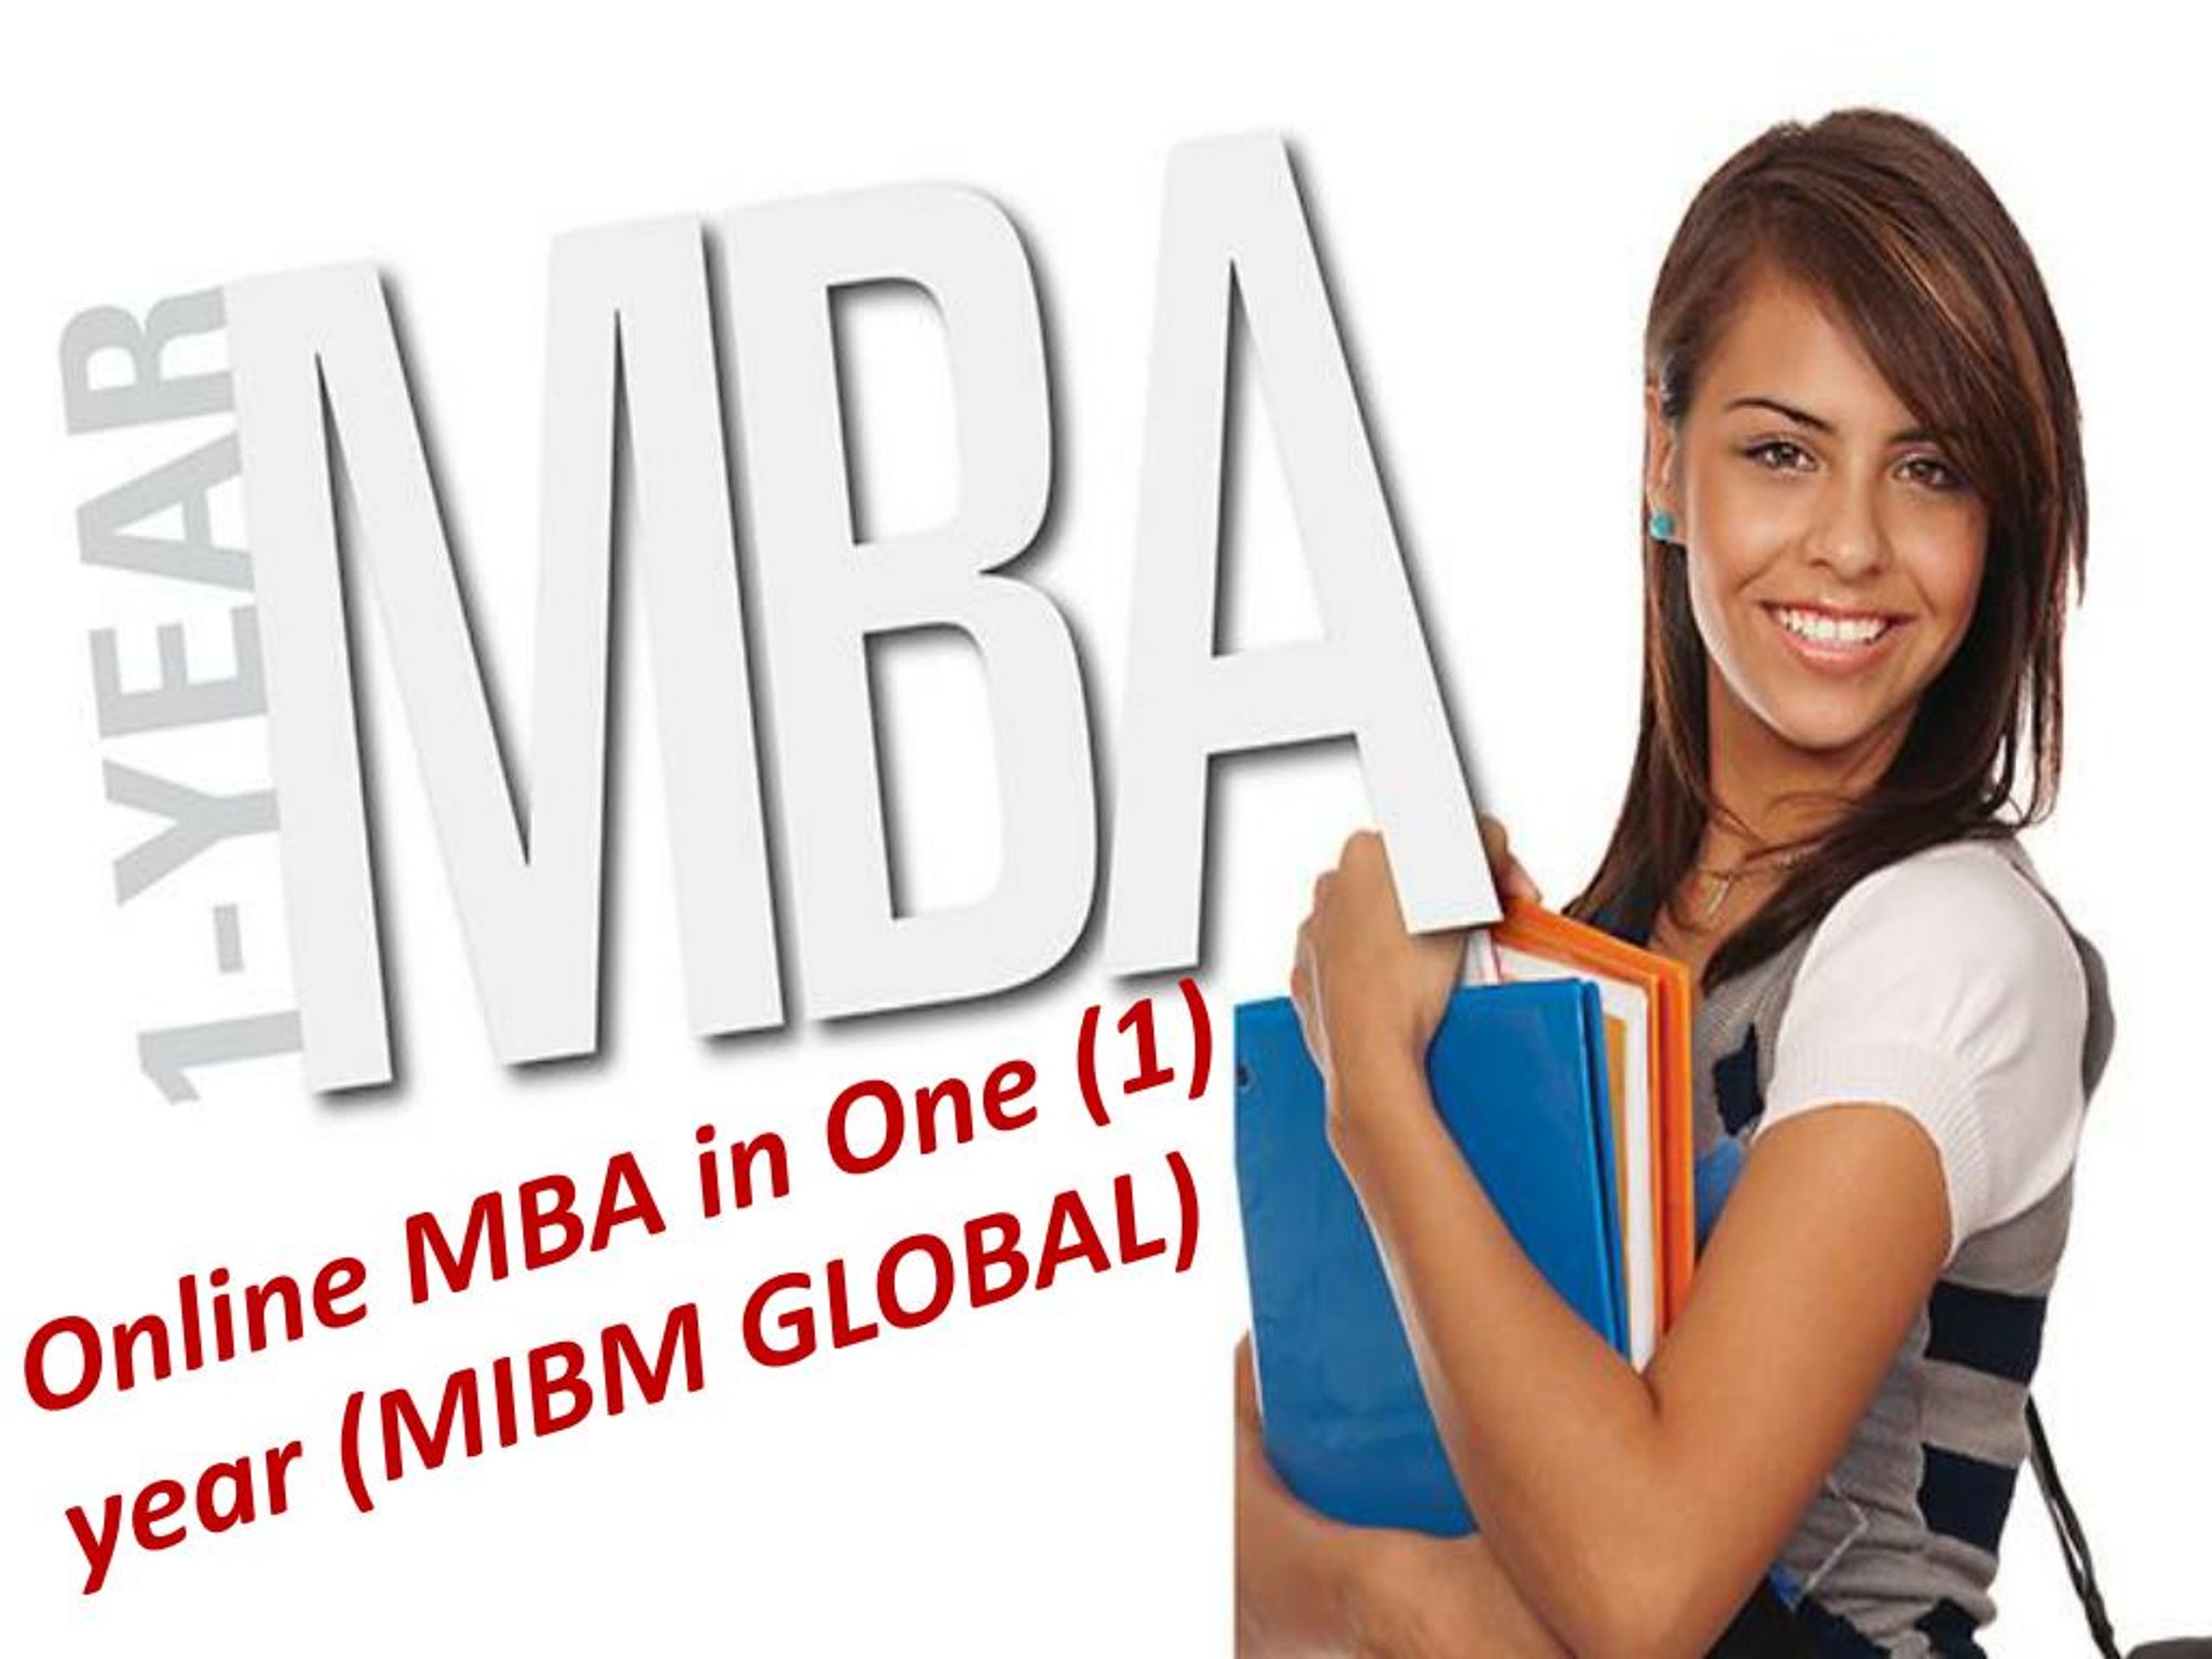 1 мва. MBA обложка. Year program. Картинки об услугах МБА. МВА обучение картинки.